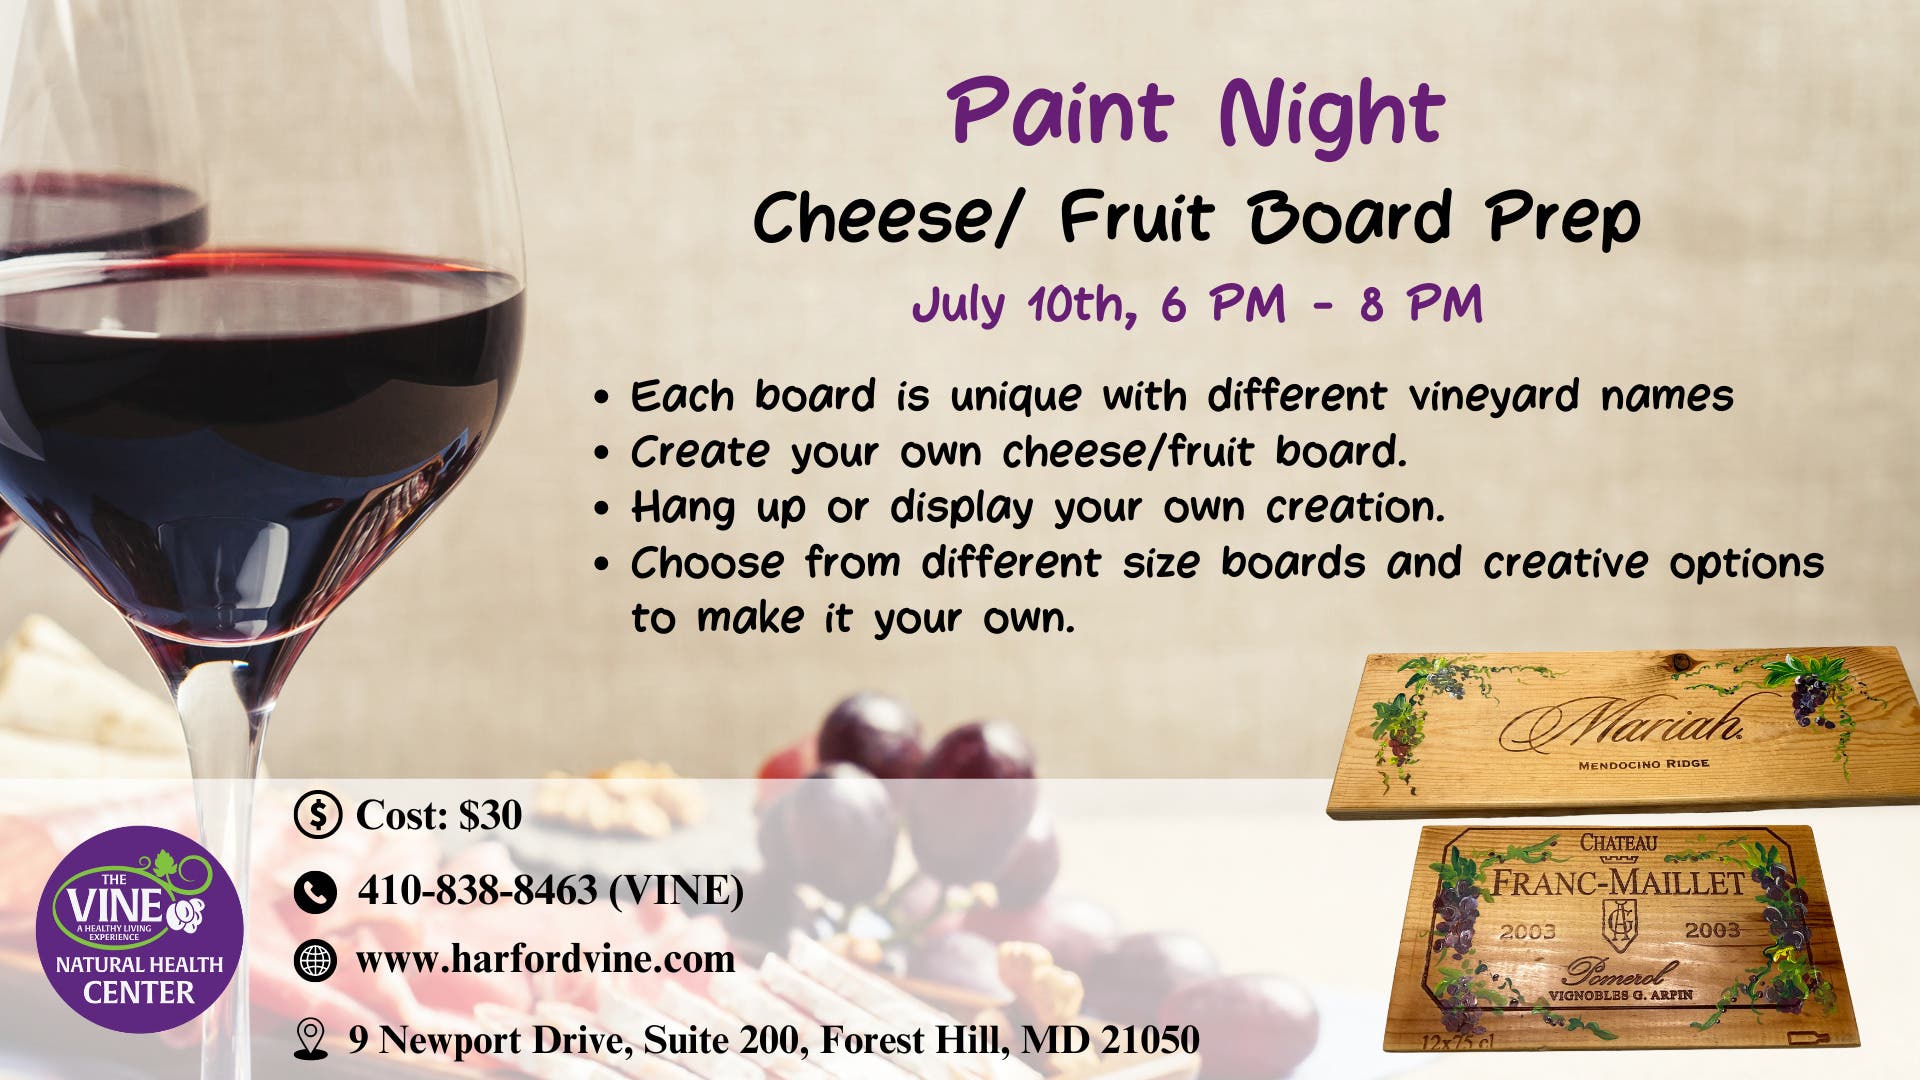 Paint Night: Cheese/ Fruit Board Prep